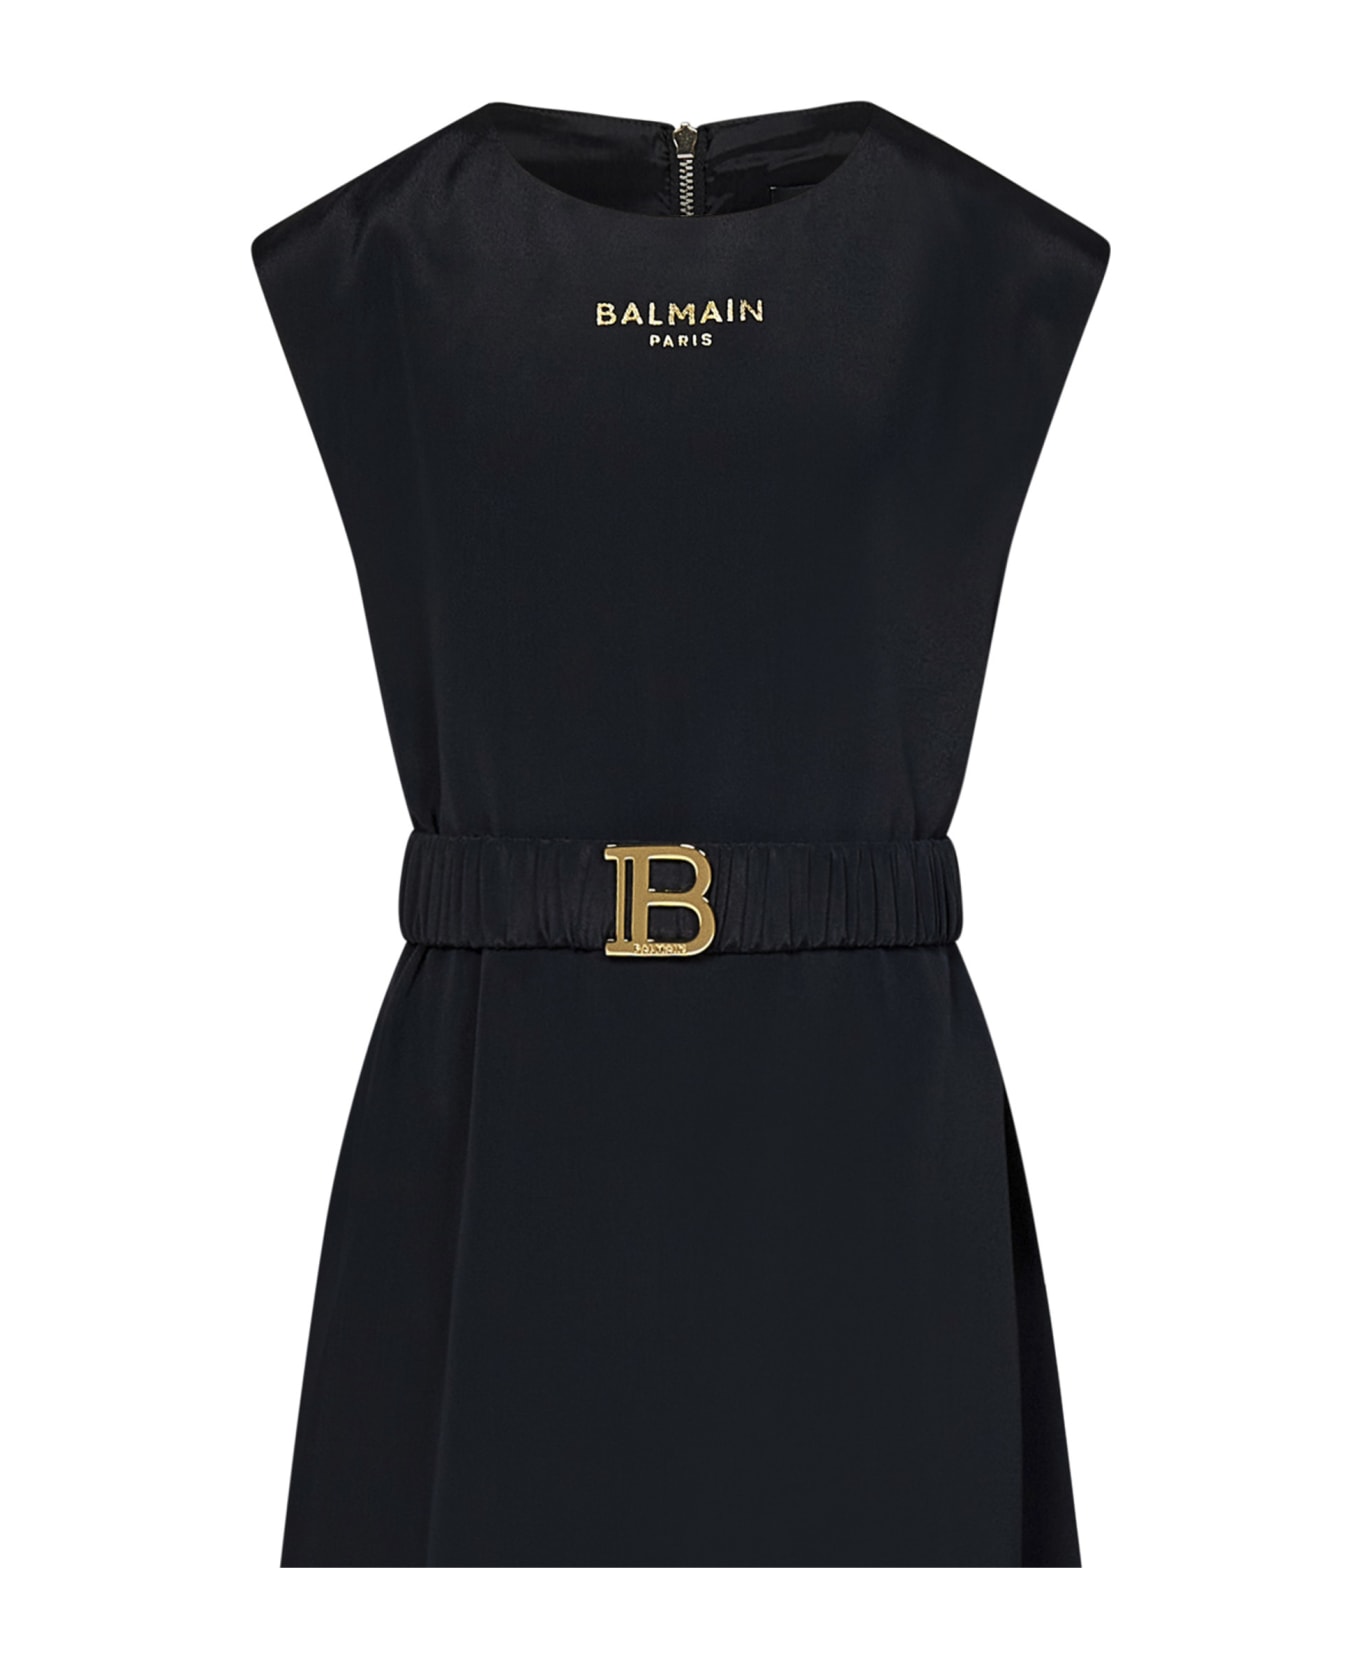 Balmain Dress - Or スーツ